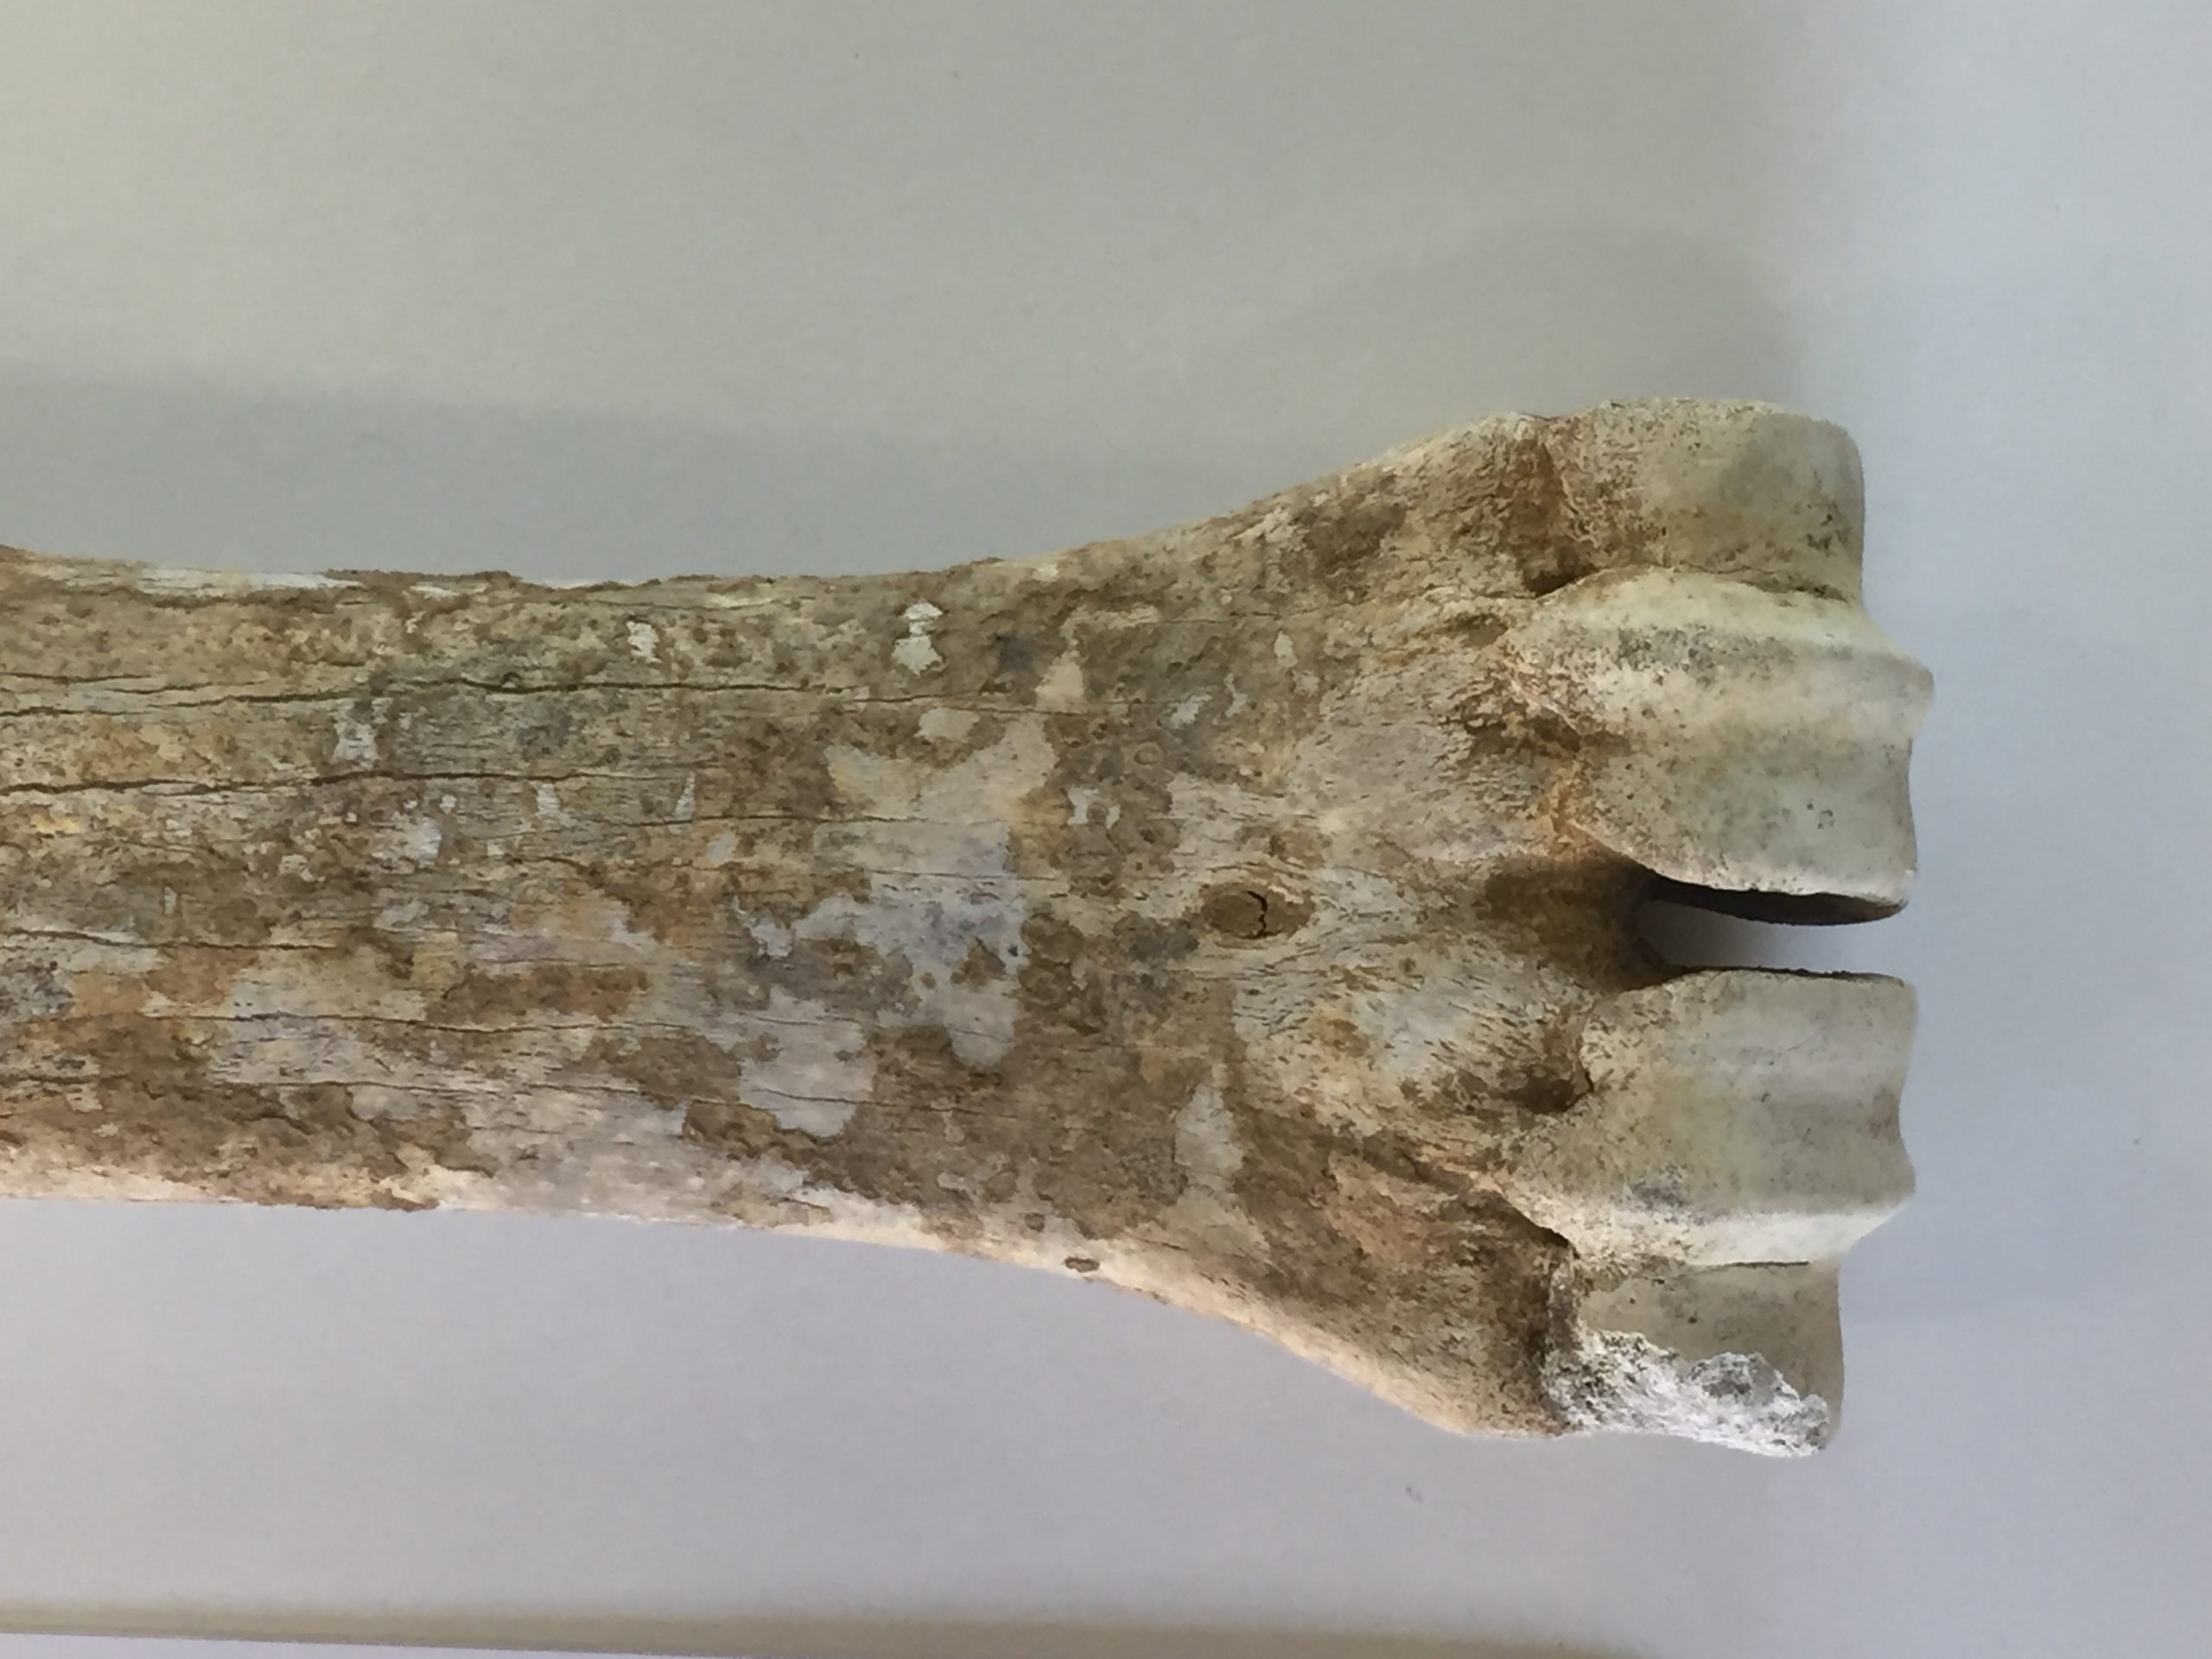 An 80,000 year old bison bone